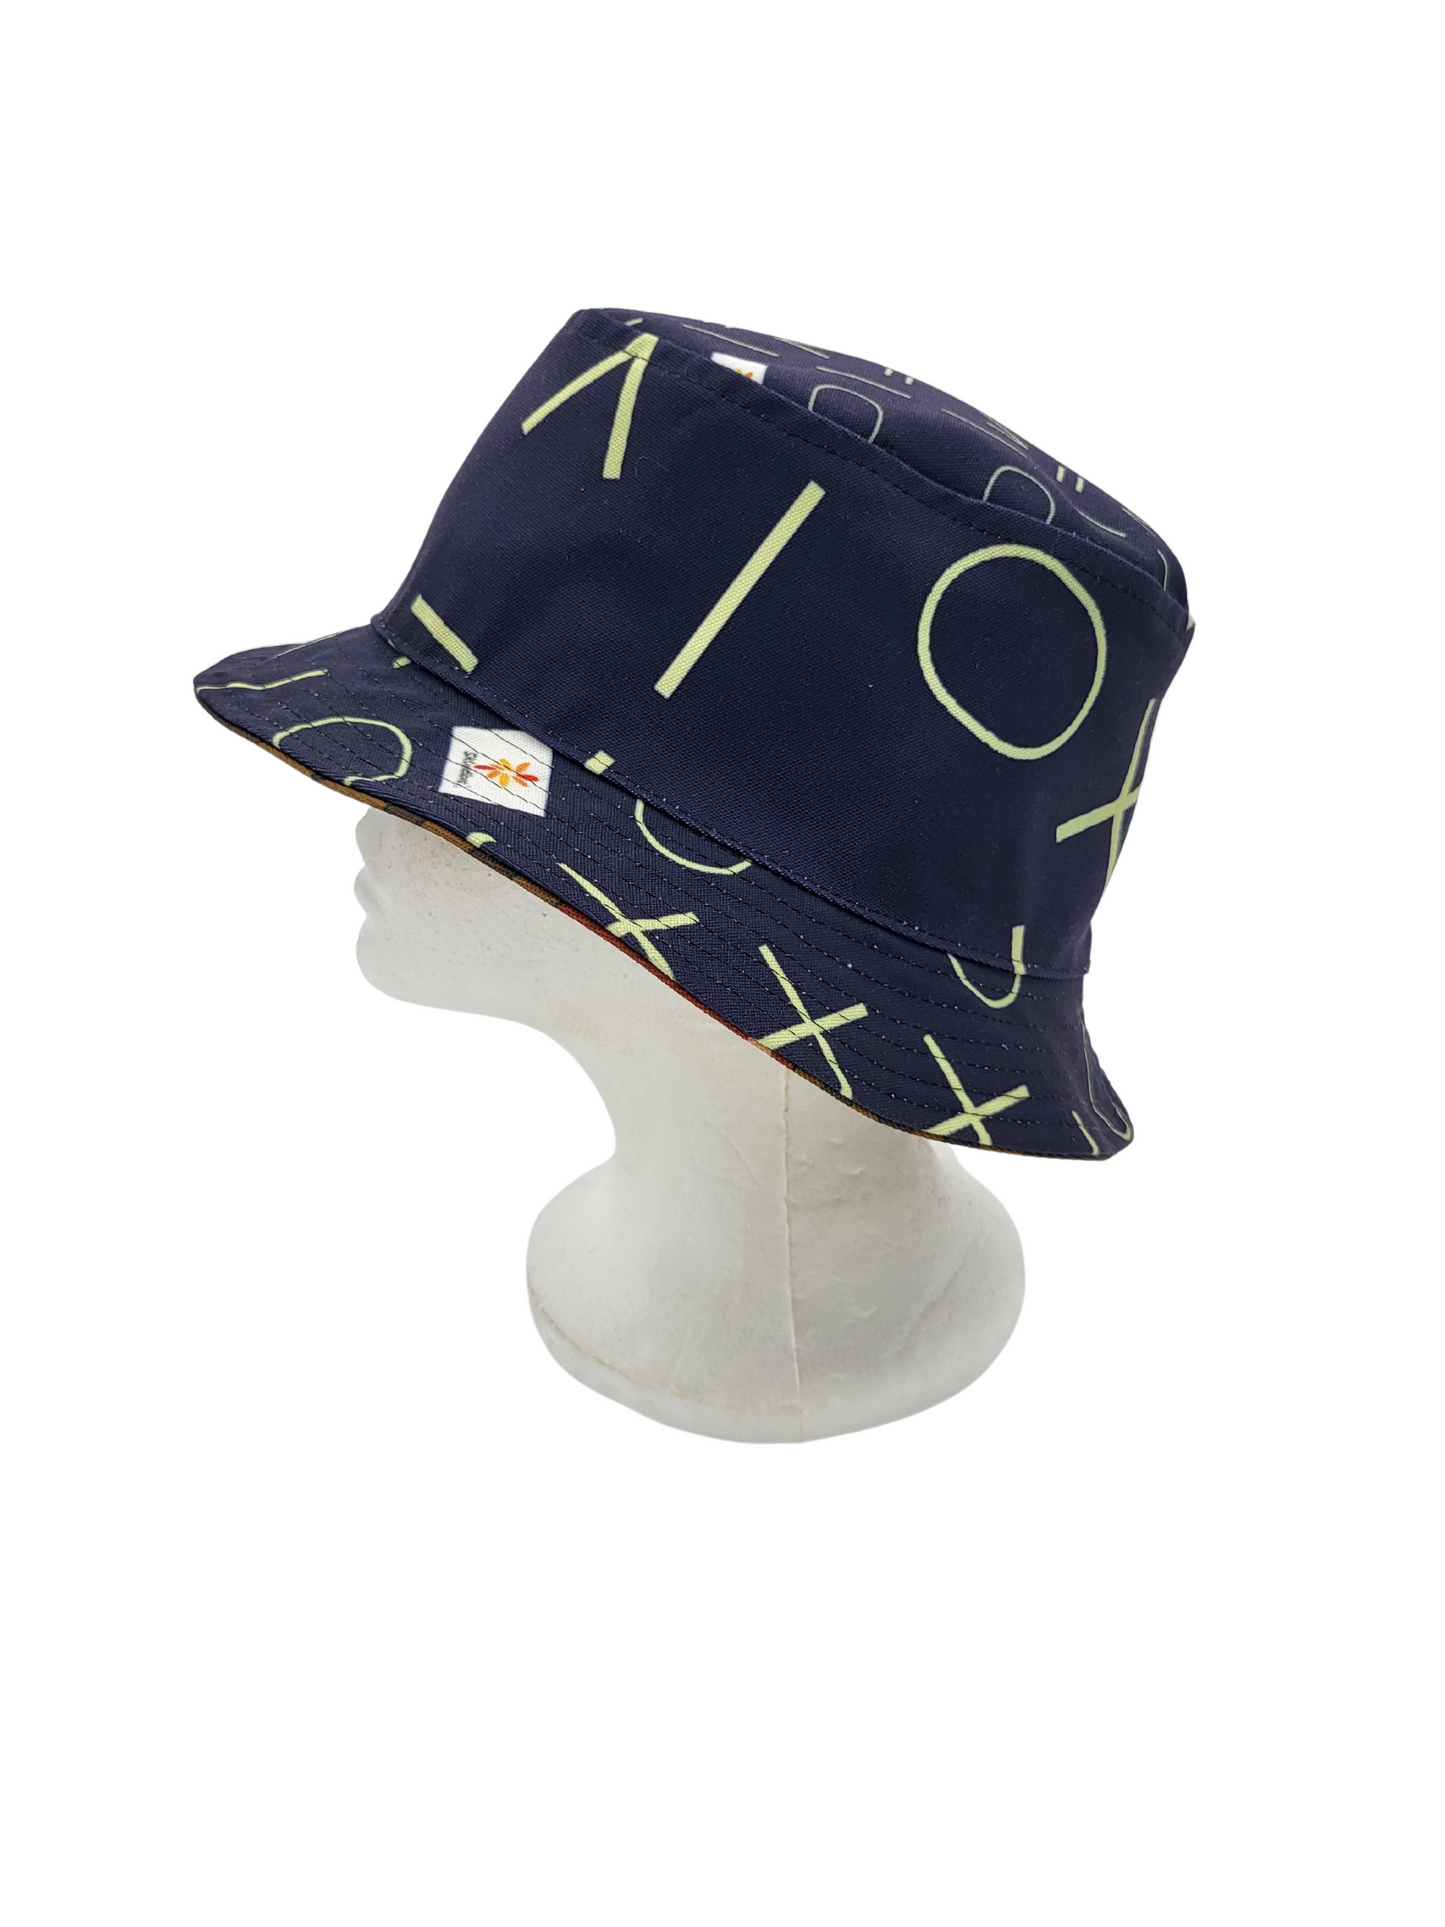 Indigo Pattern 1/Mud Cloth Pattern 1 Unisex Reversible Bucket Hat